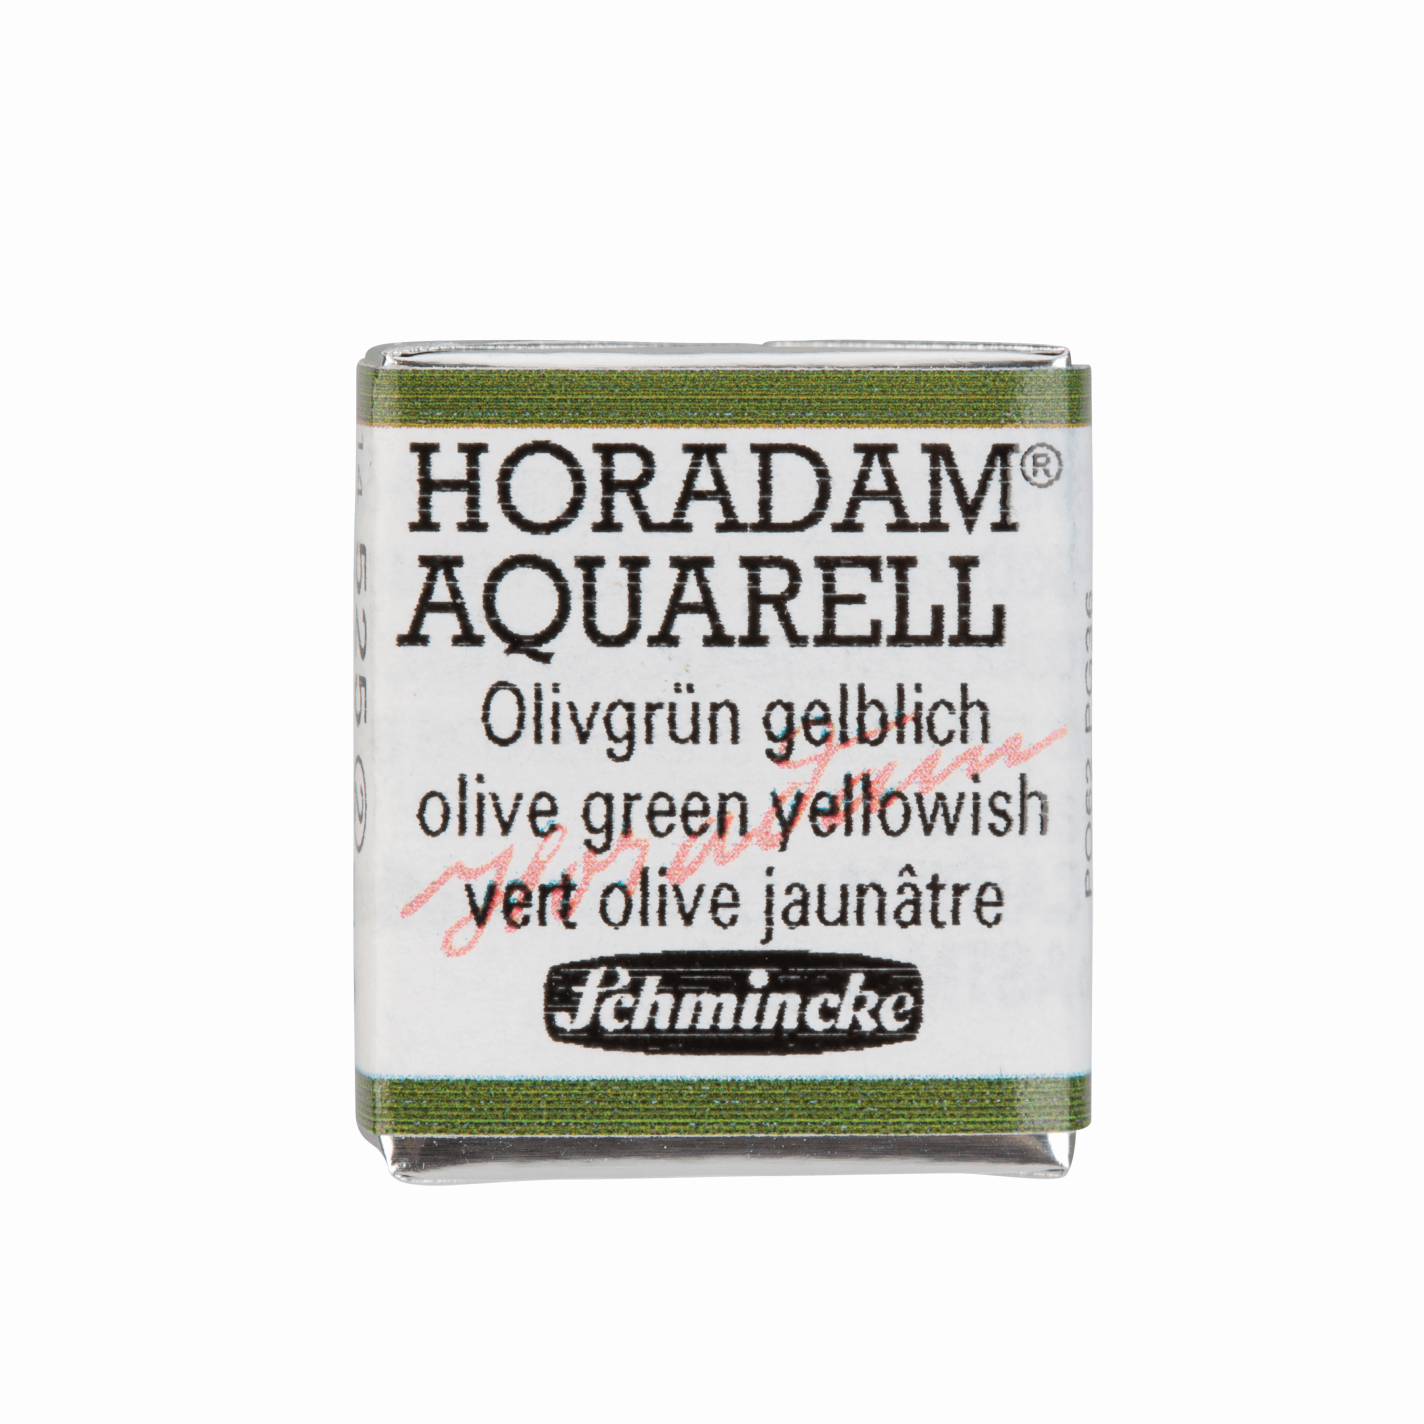 Schmincke Horadam Aquarell pans 1/2 pan Olive Green Yellowish